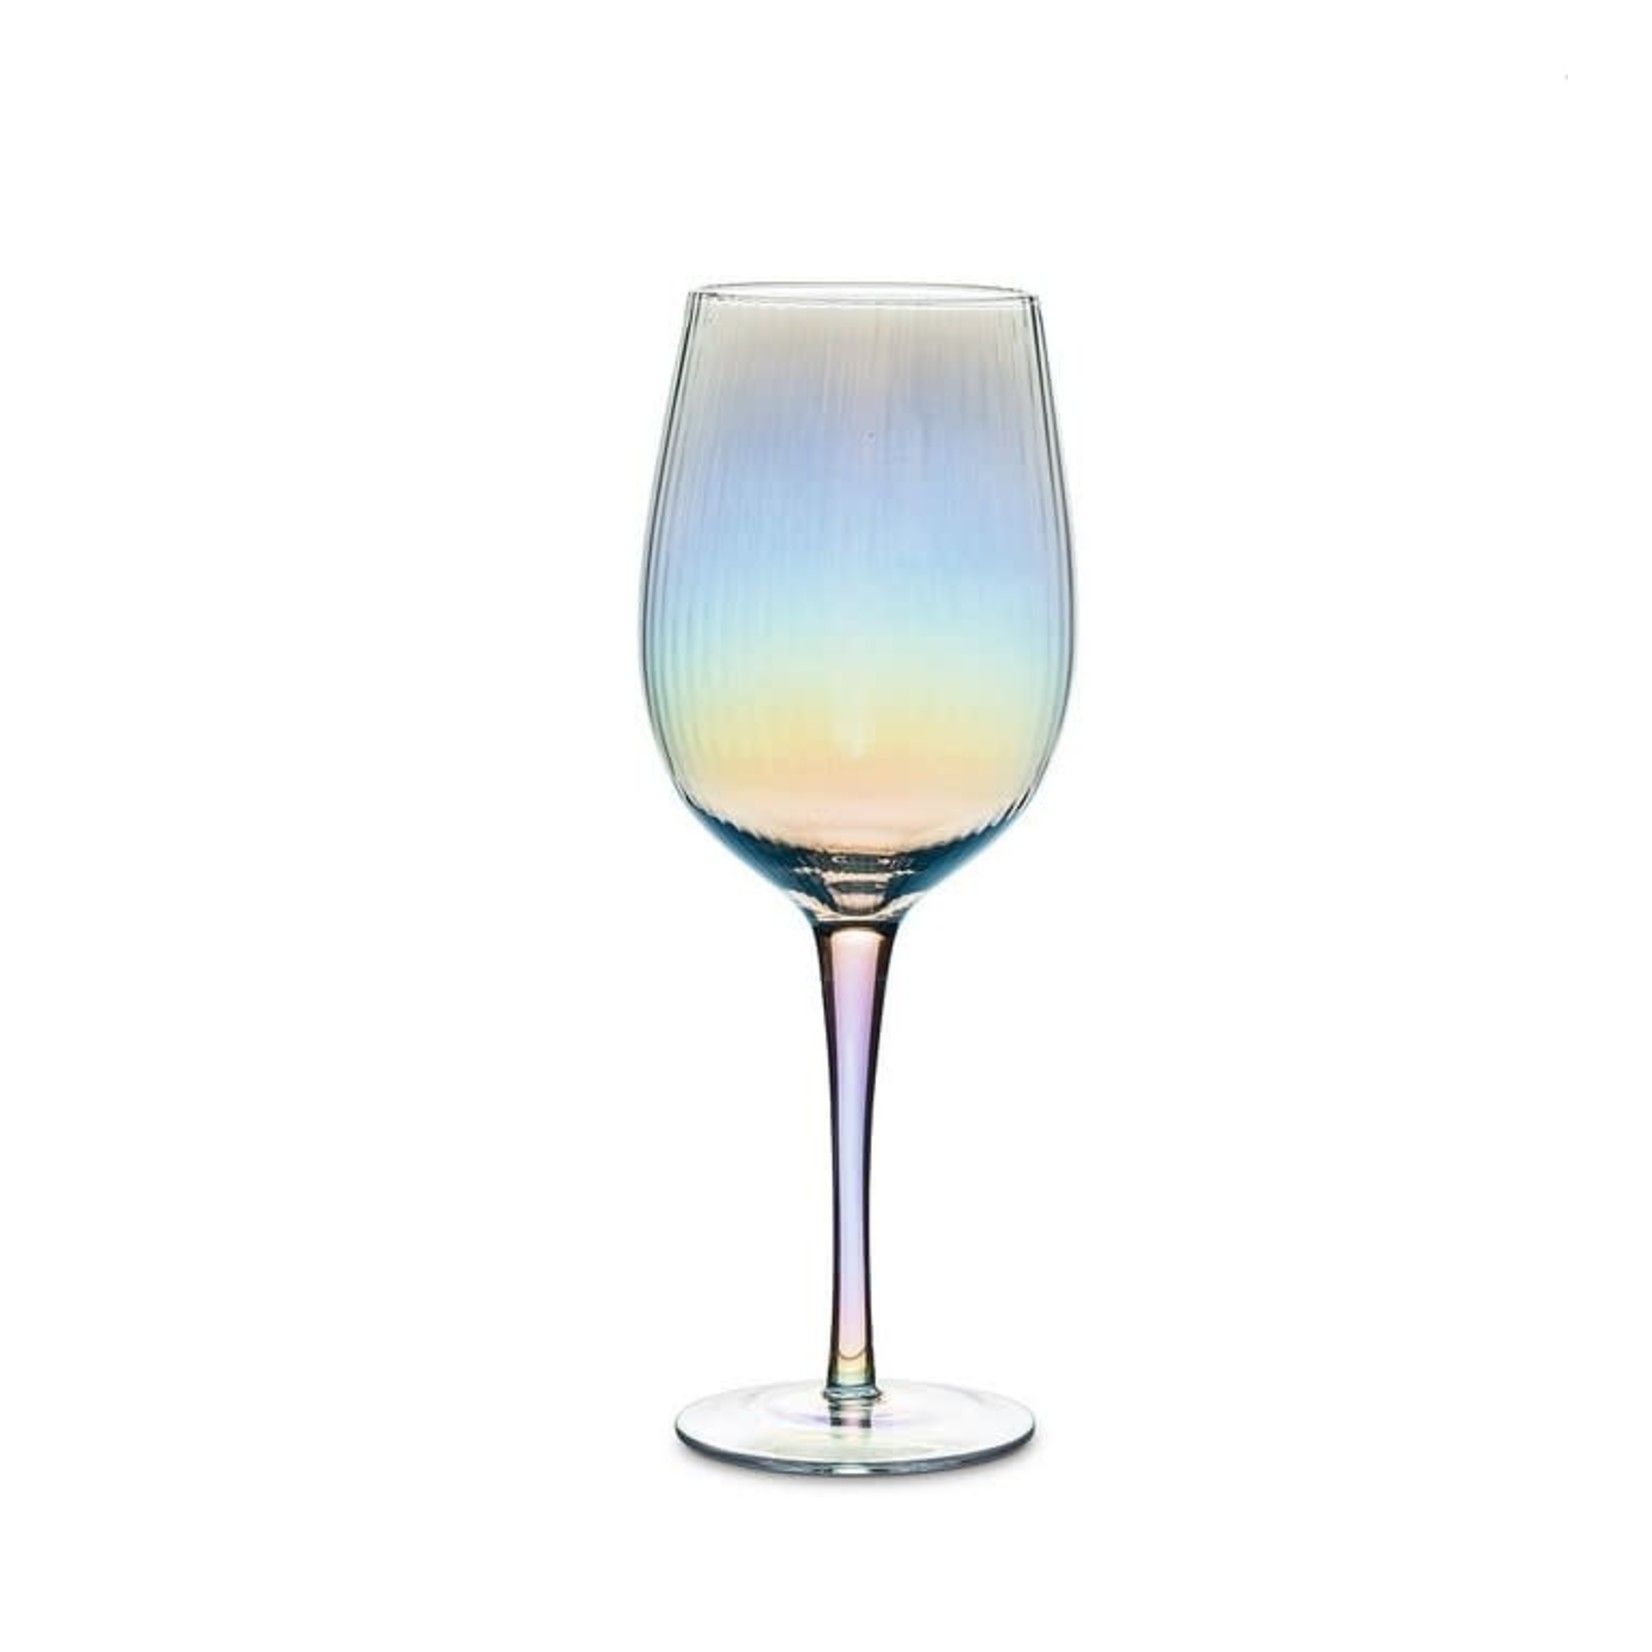 ABBOTT ABBOTT Small Wine Glass 9" - Lustre Optic DNR